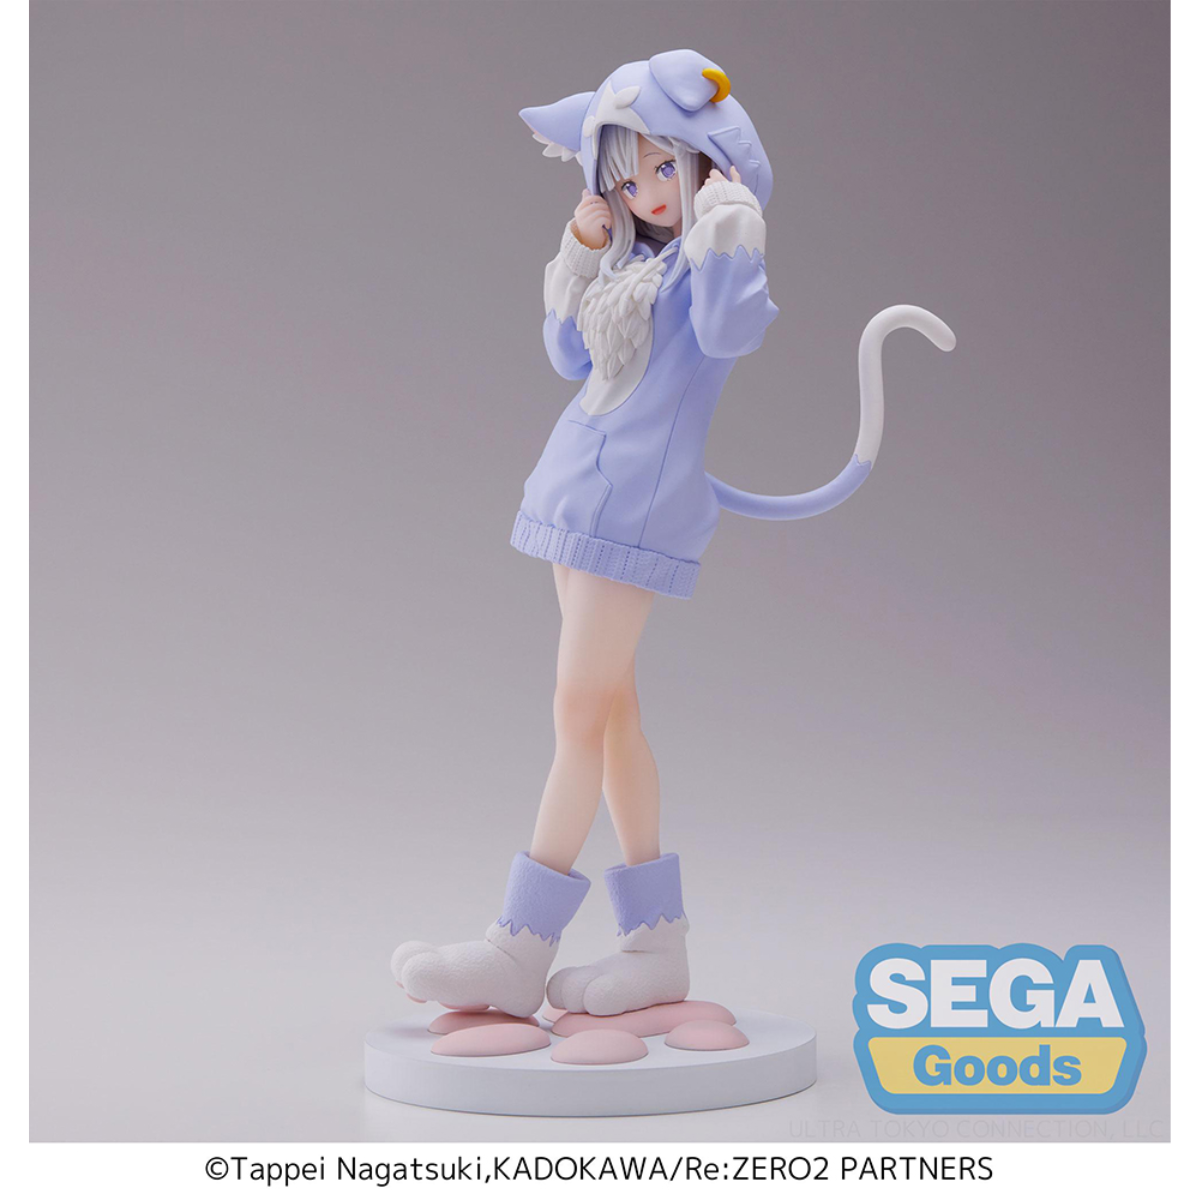 Re:Zero Starting Life In Another World Luminaata Figure "Emilia" (Mofumofu Pack)-Sega-Ace Cards & Collectibles